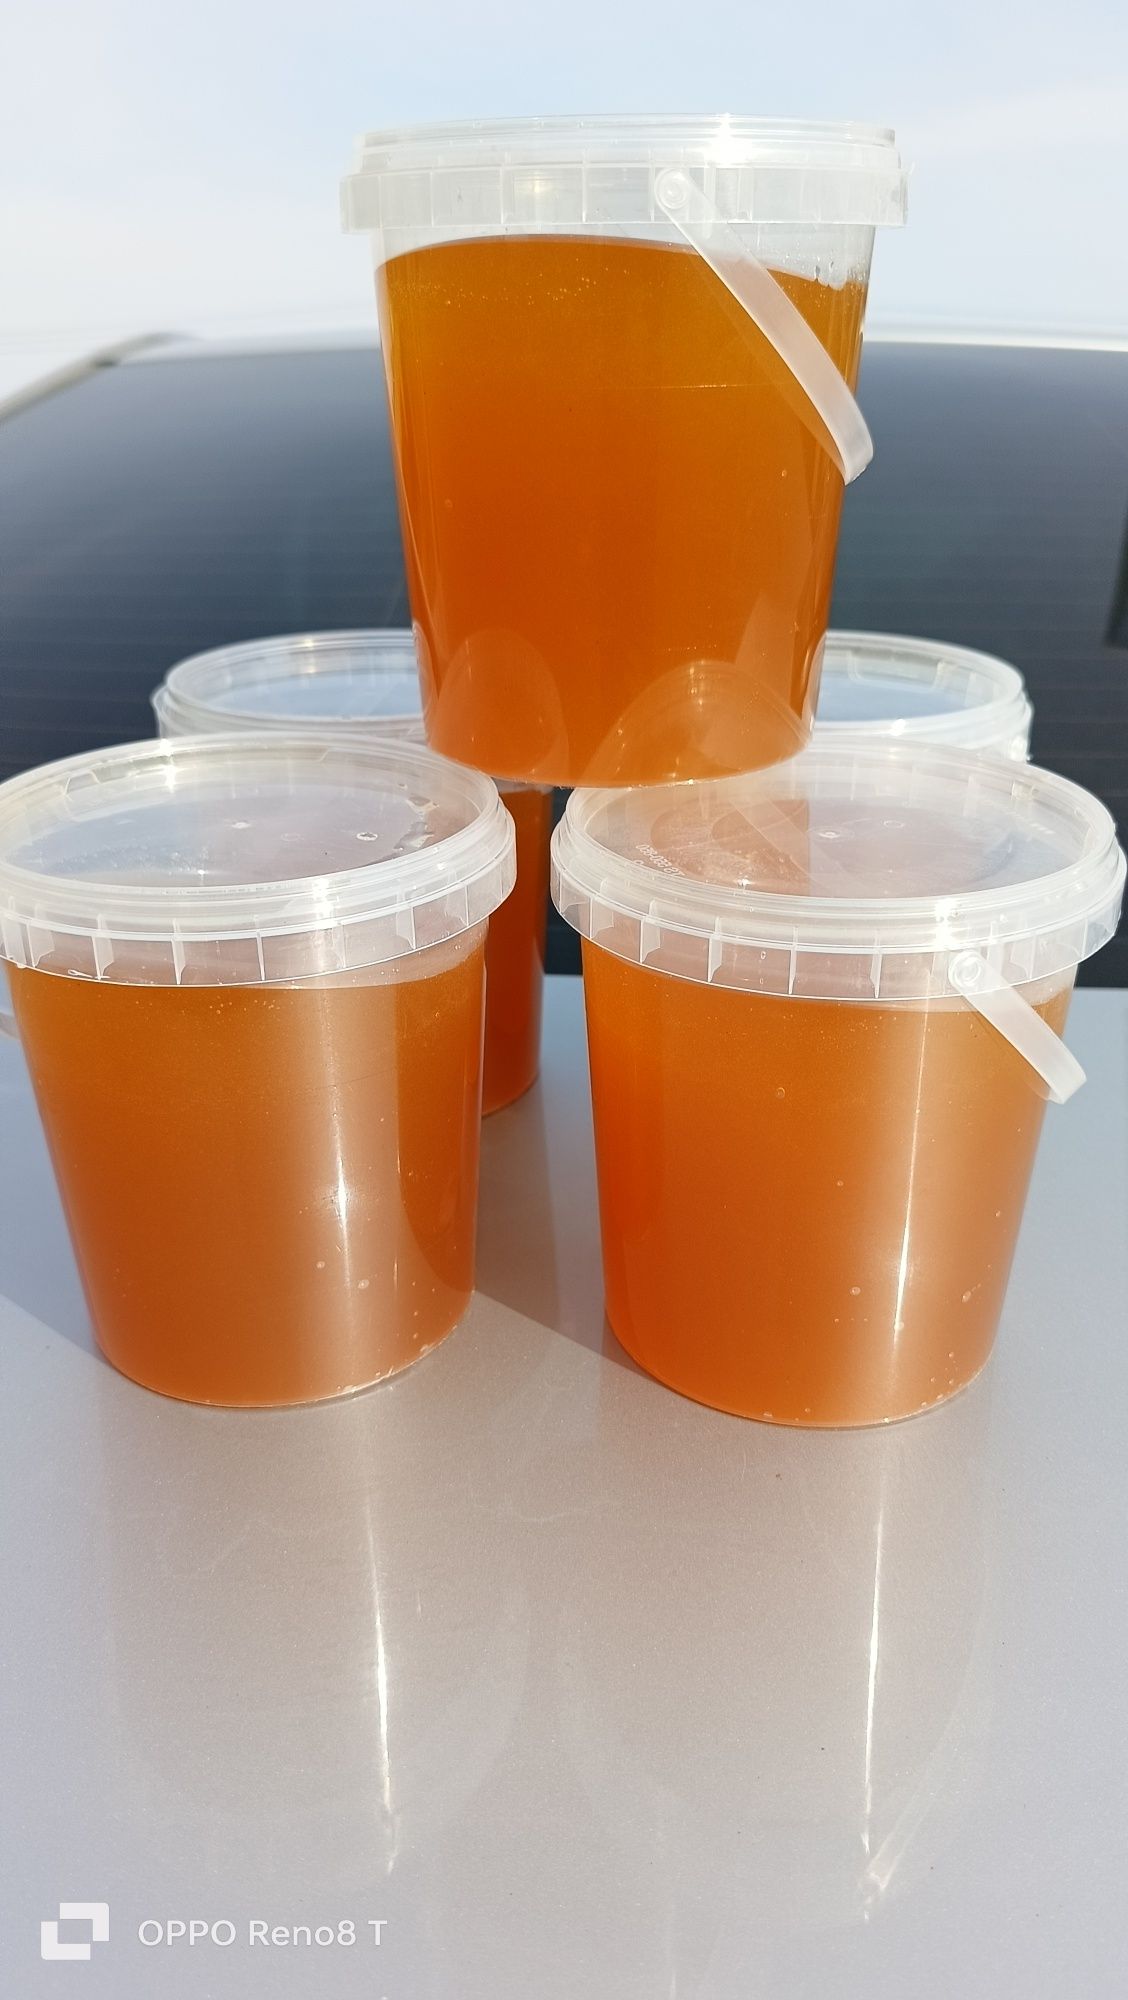 БАЛ - МЁД алыңыздар (мёд пчелиный, натуральный)